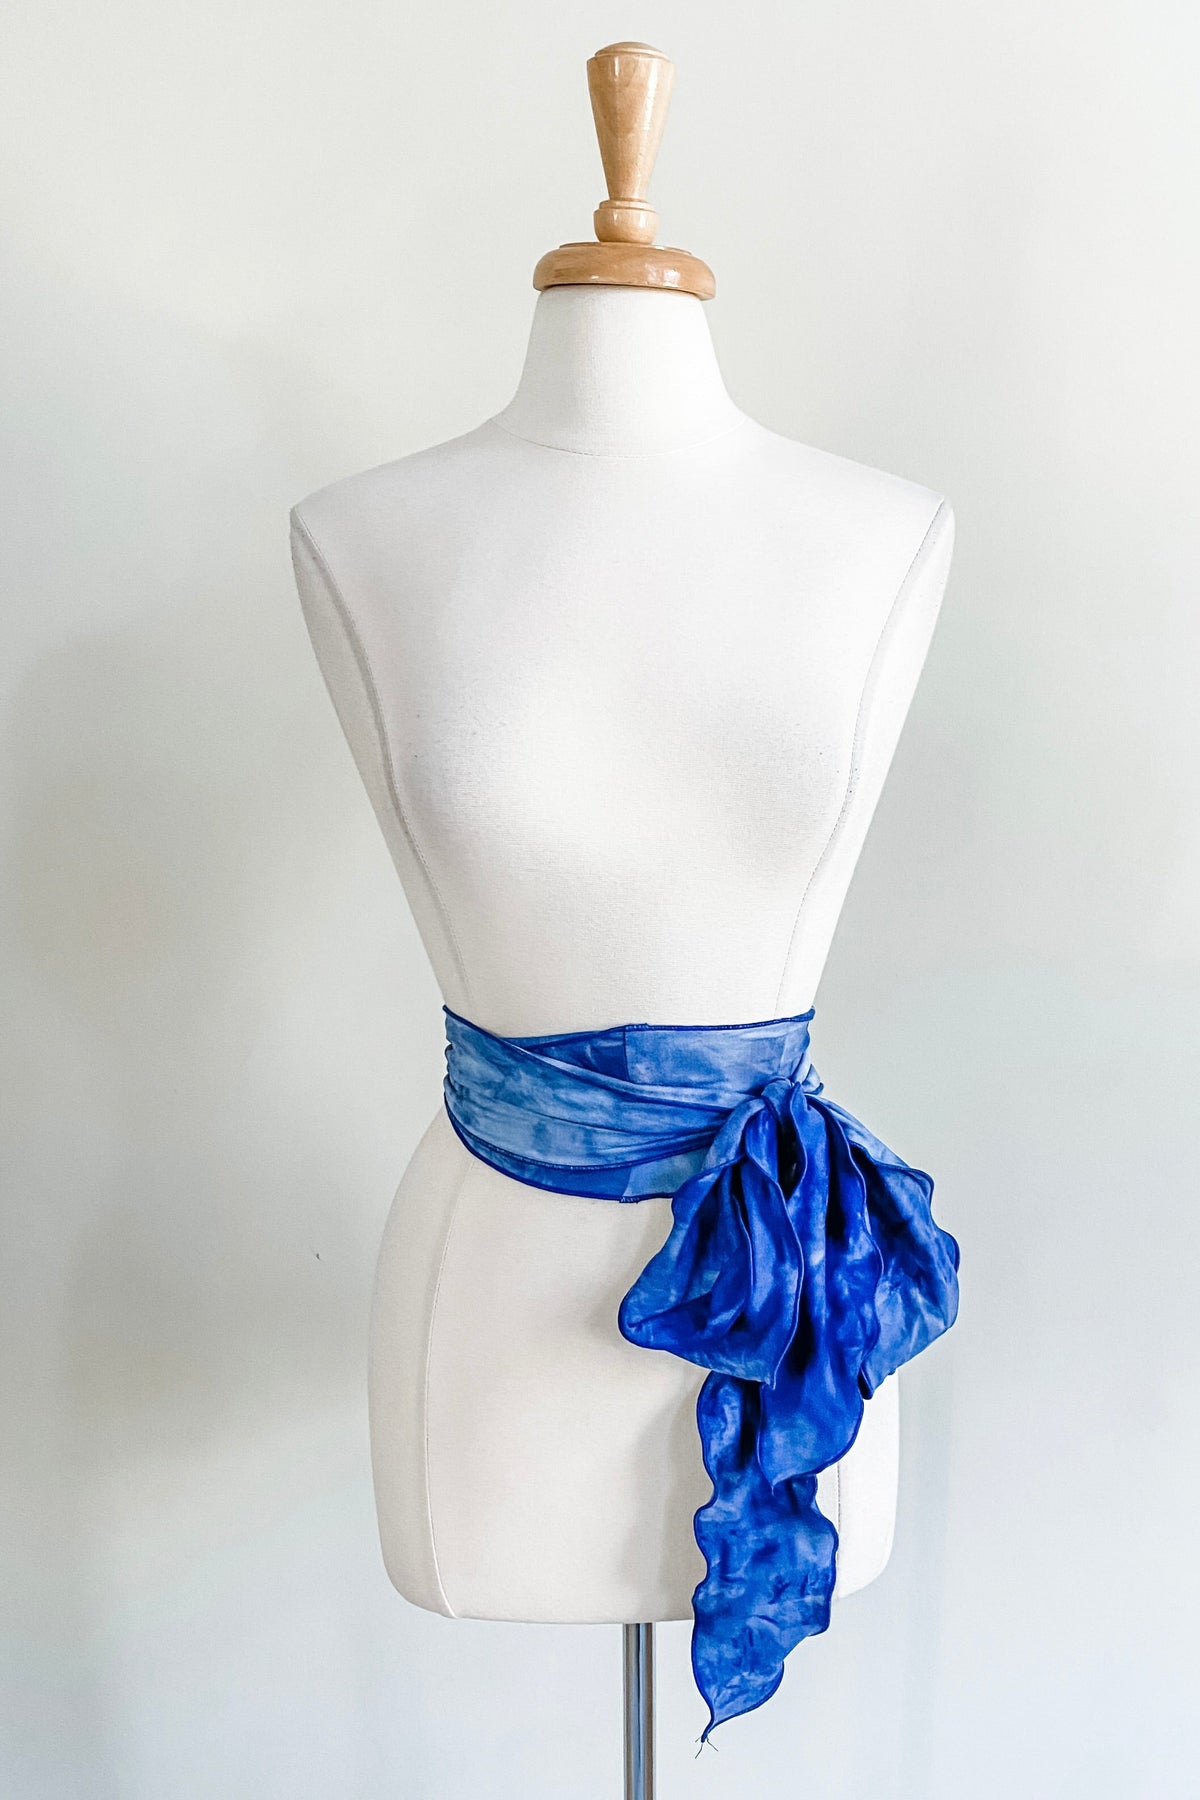 Diane Kroe Sash Belt (Indigo Tie-Dye) - The Classic Capsule Collection